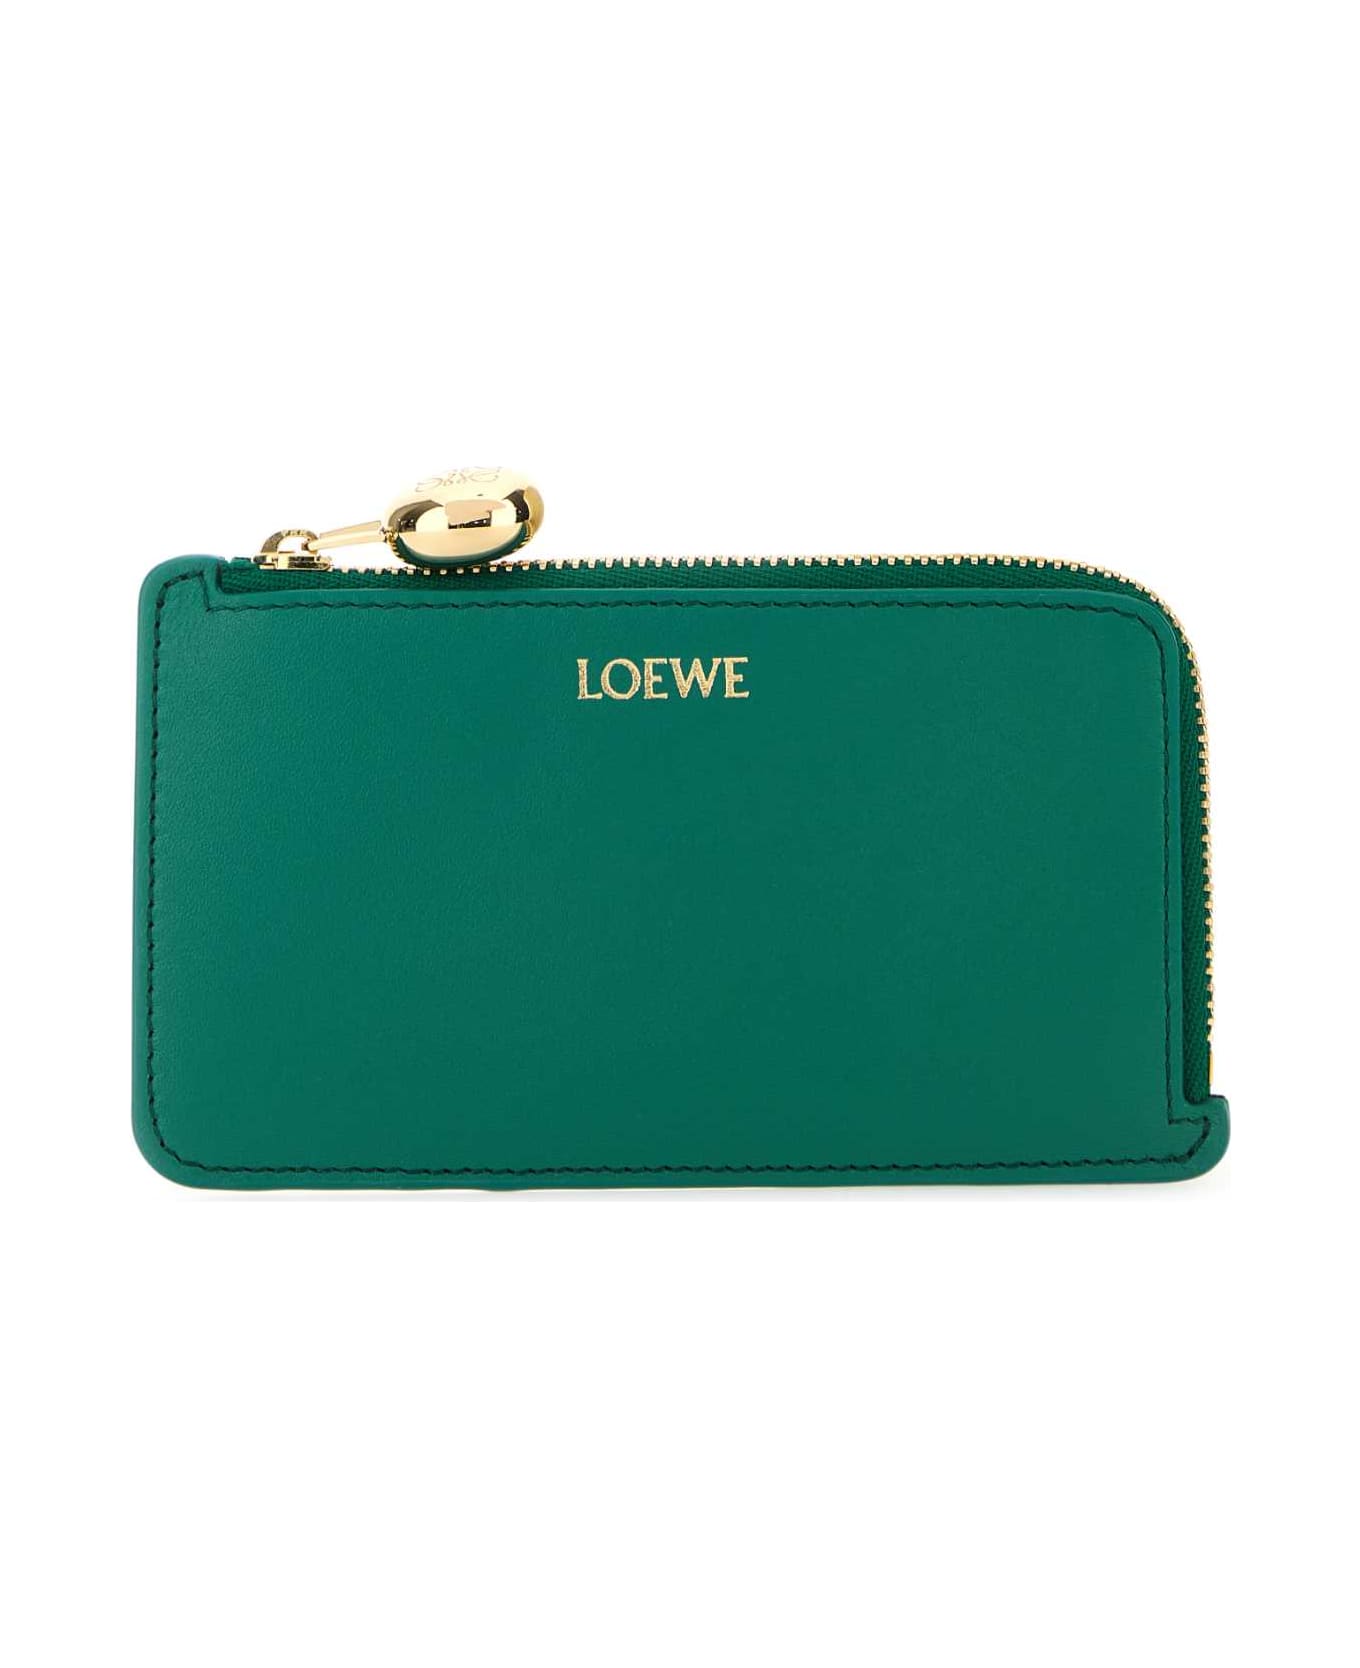 Loewe Emerald Green Leather Card Holder - EMERALDGREEN